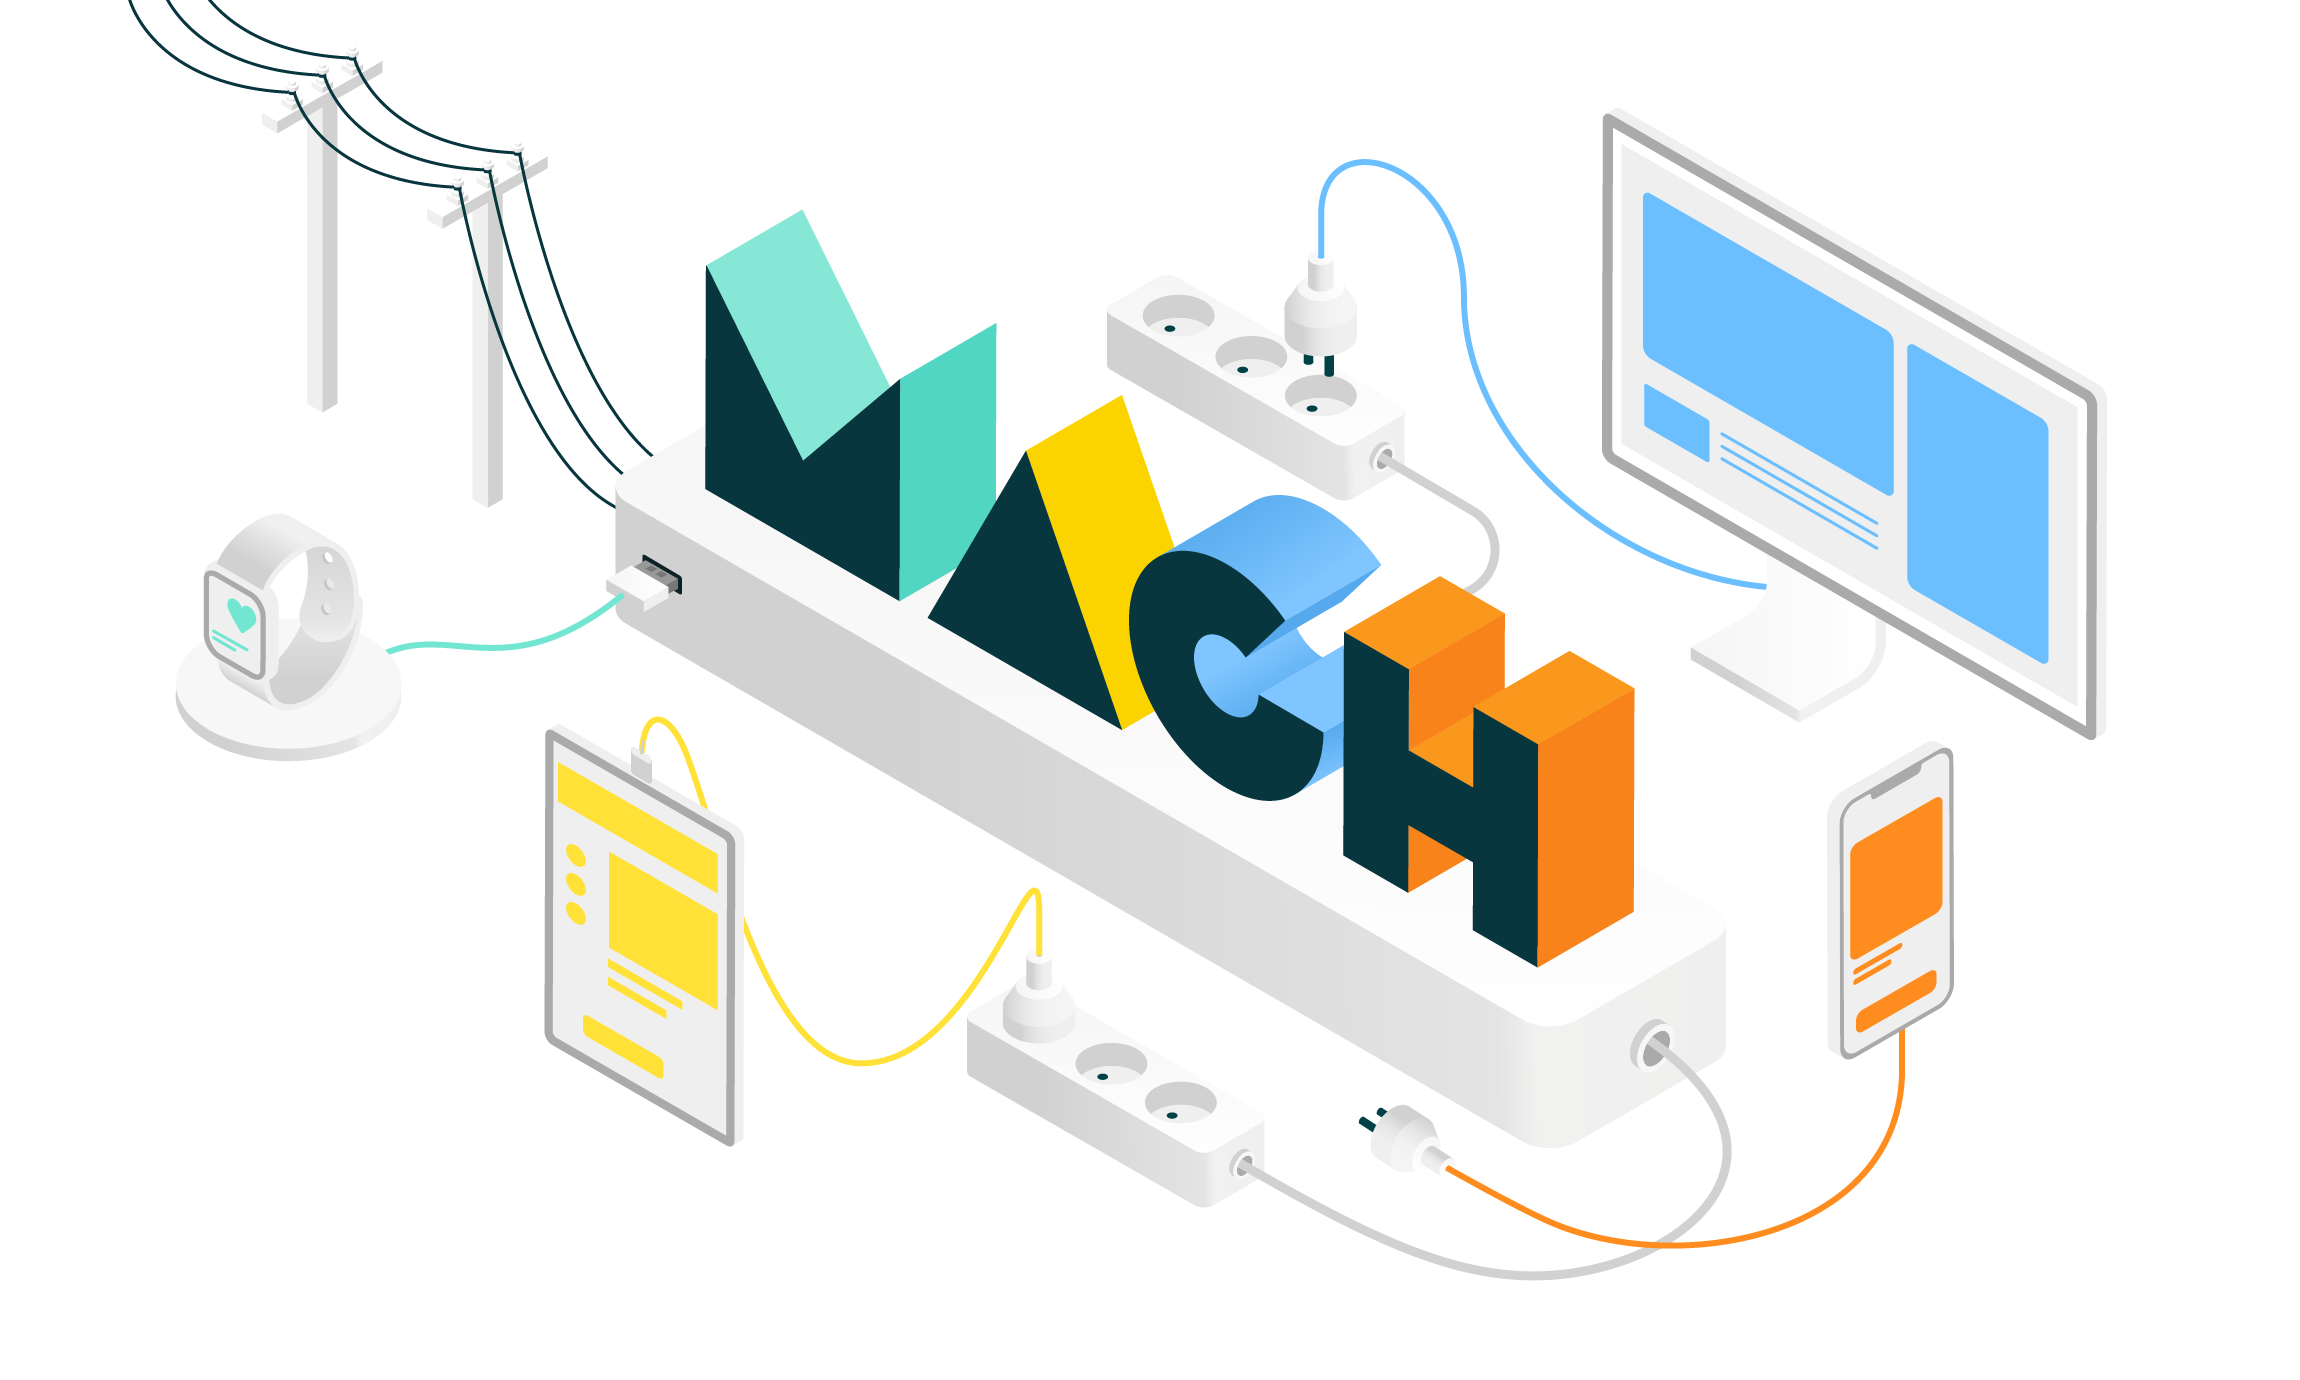 MACH architecture: The future of eCommerce